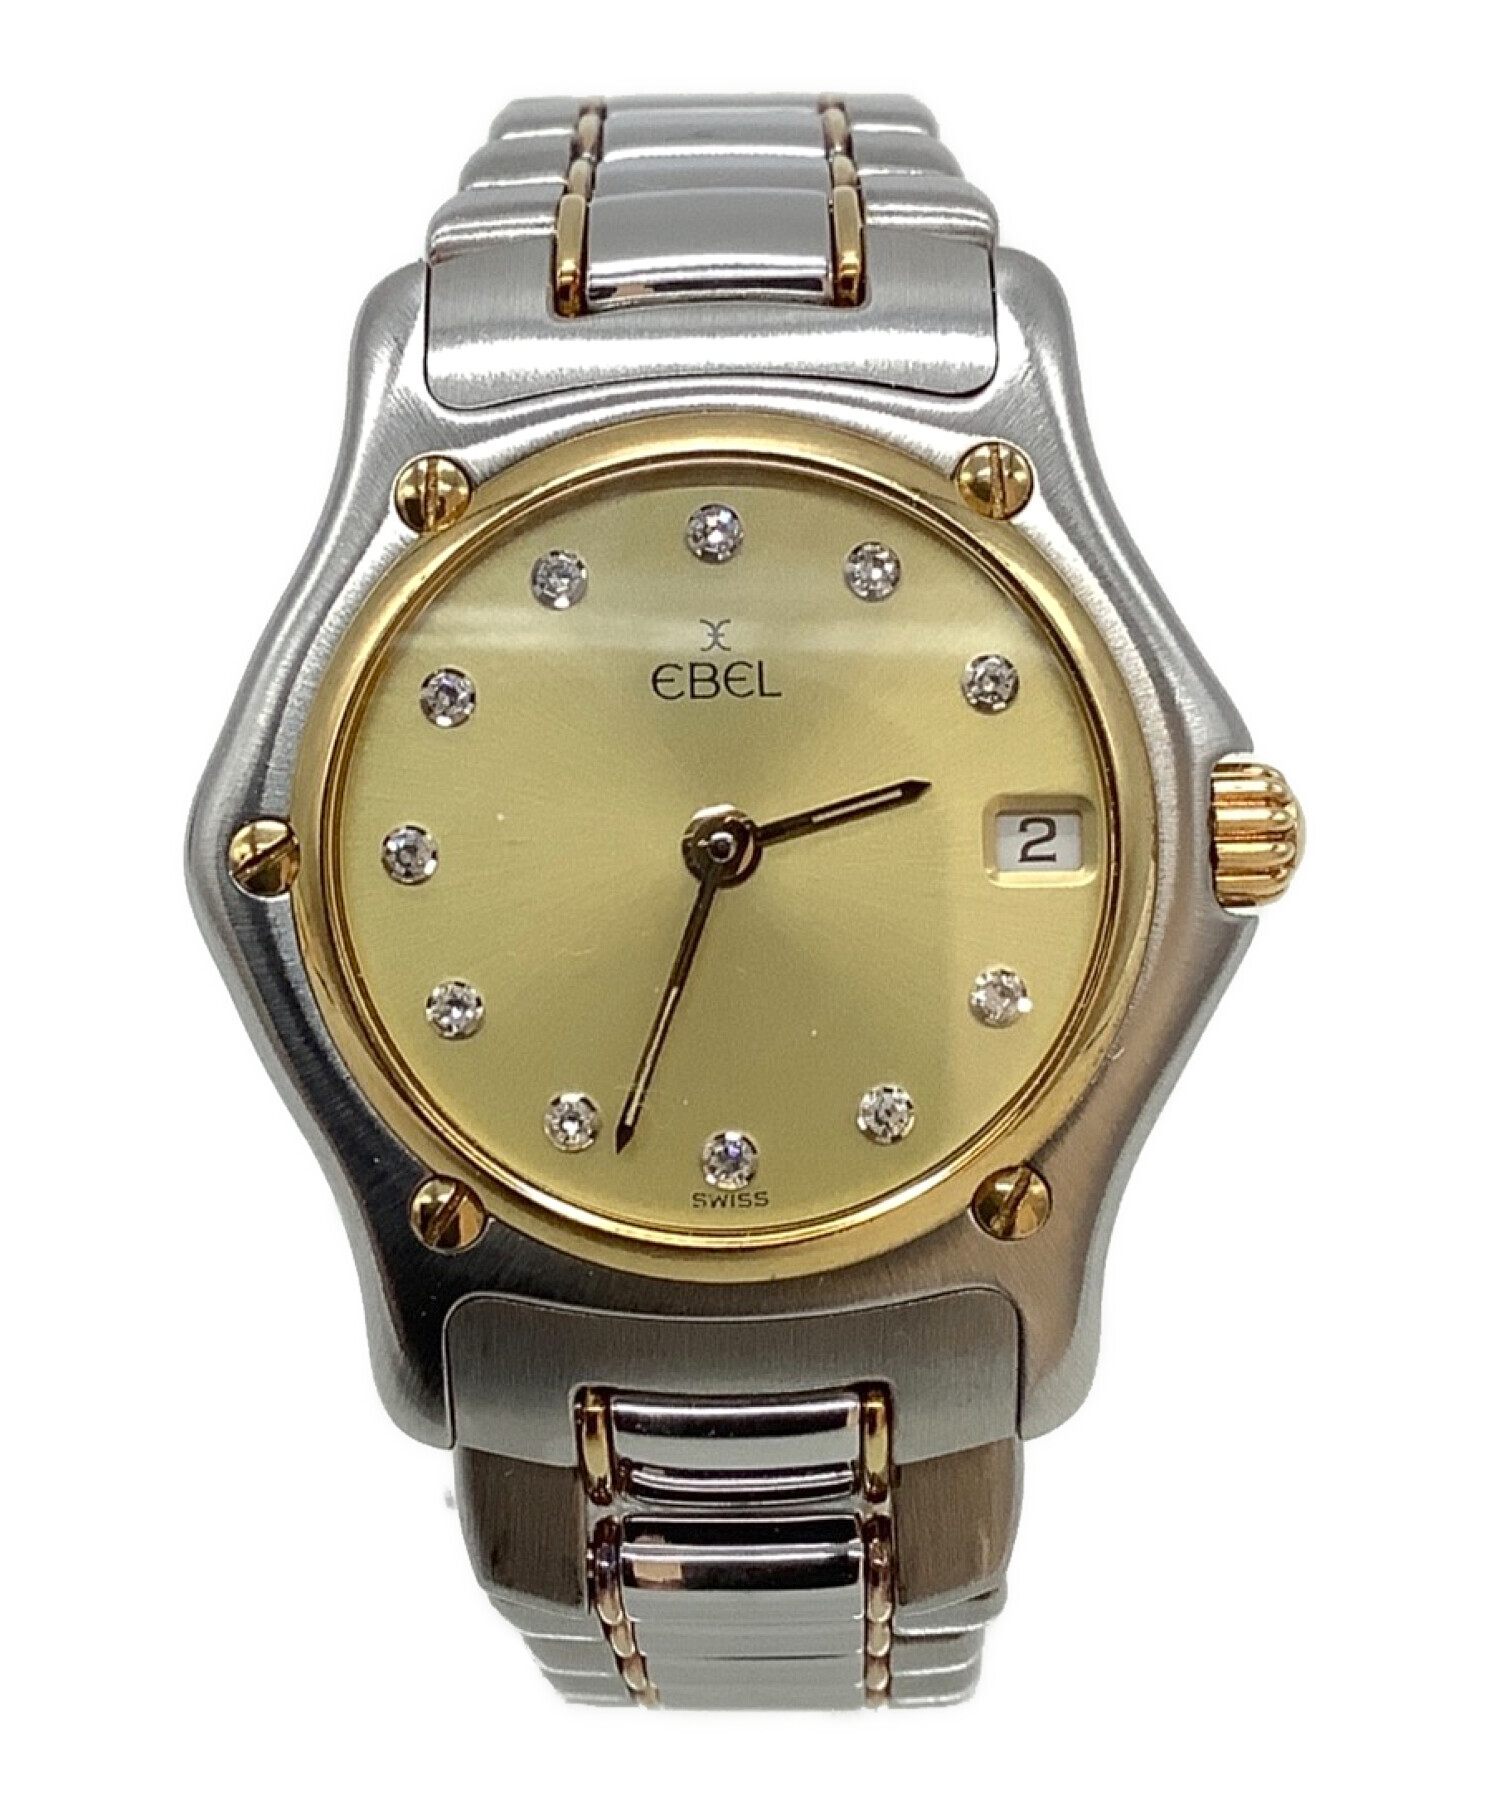 EBEL(エベル) 腕時計 クラシックウェーブ